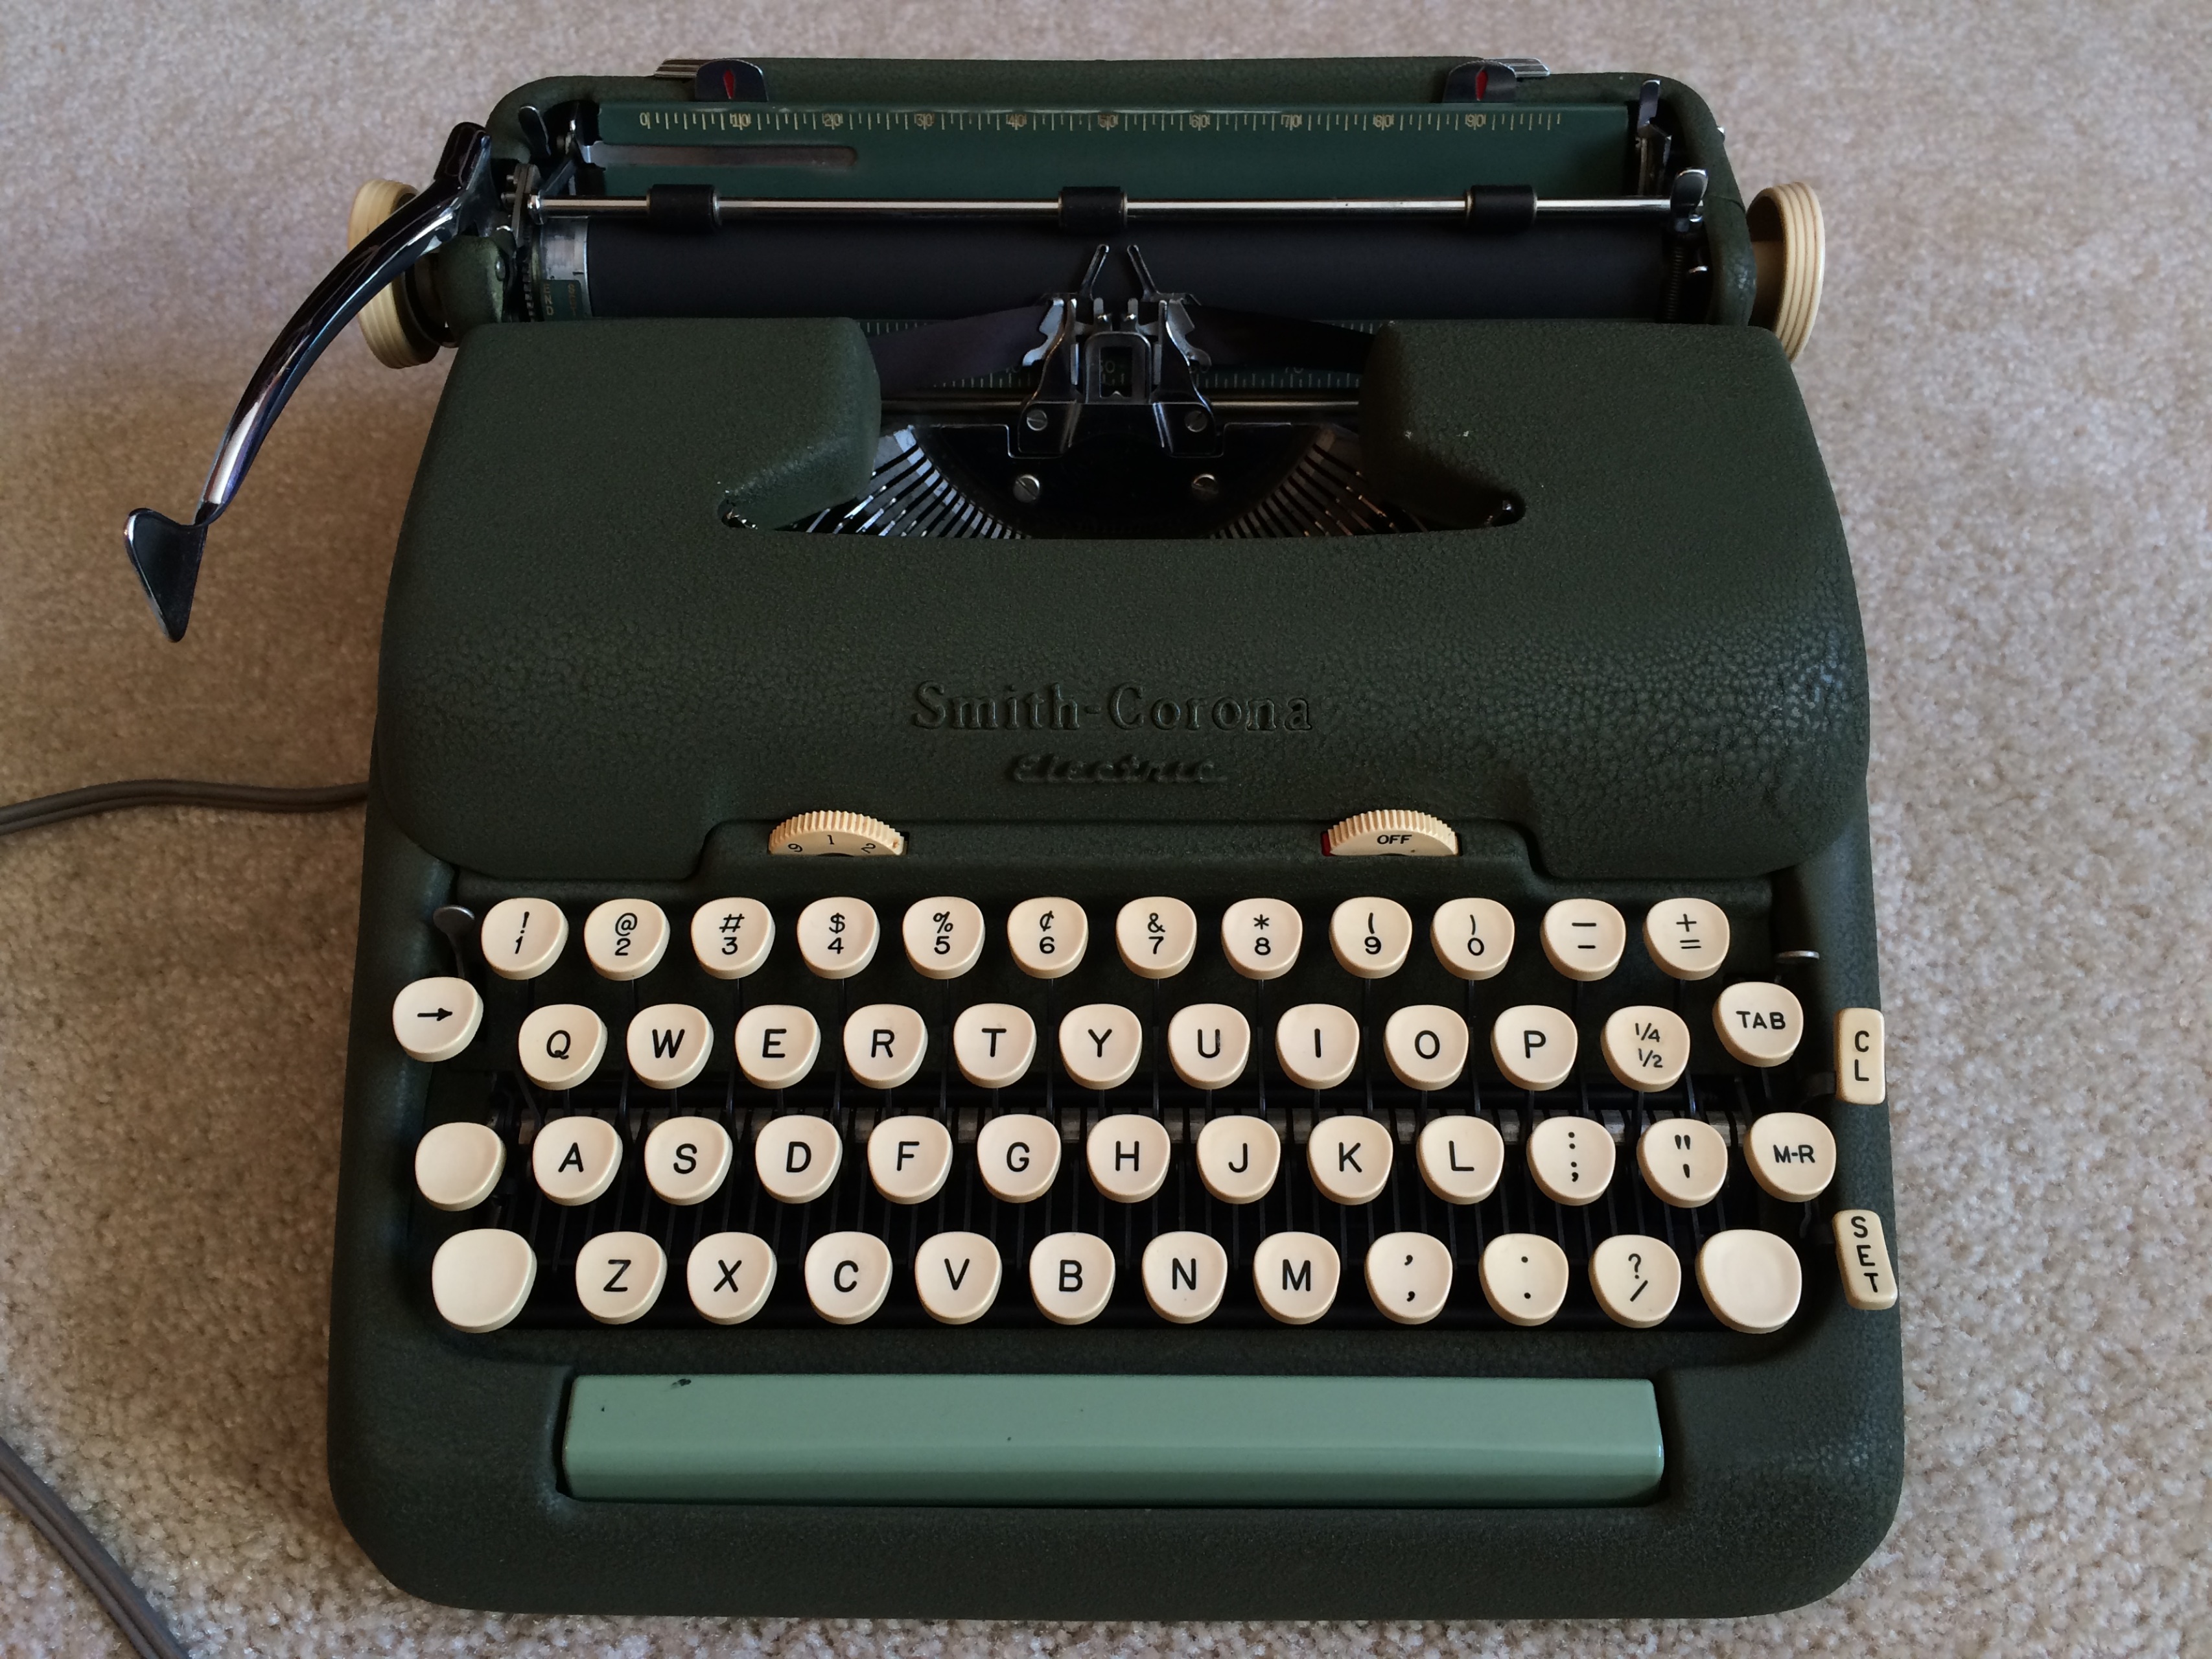 Smith Corona 'Electric' portable typewriter (1950s) - $650 - Antique  Typewriters